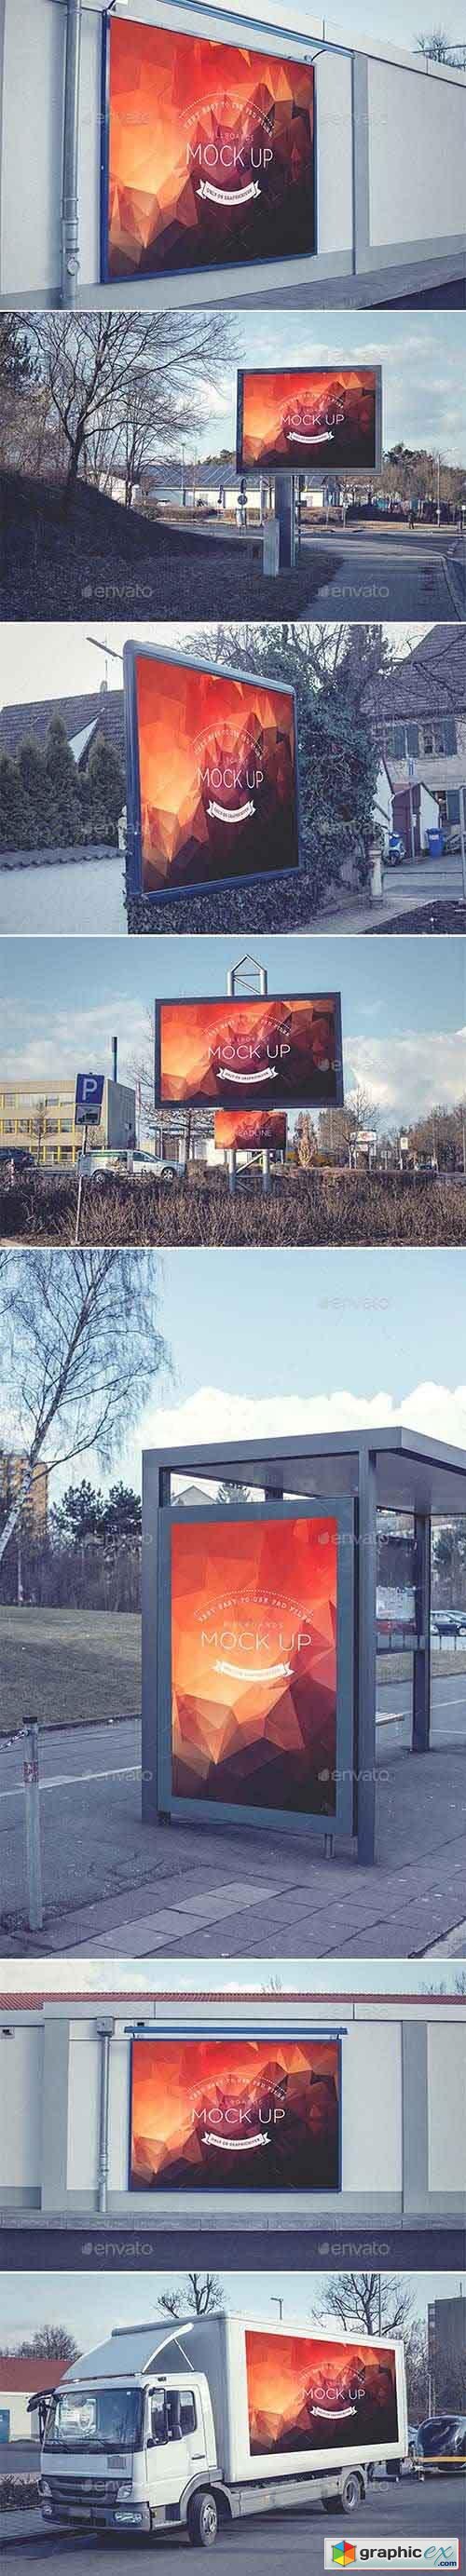 Billboards - Realistic Mock Up